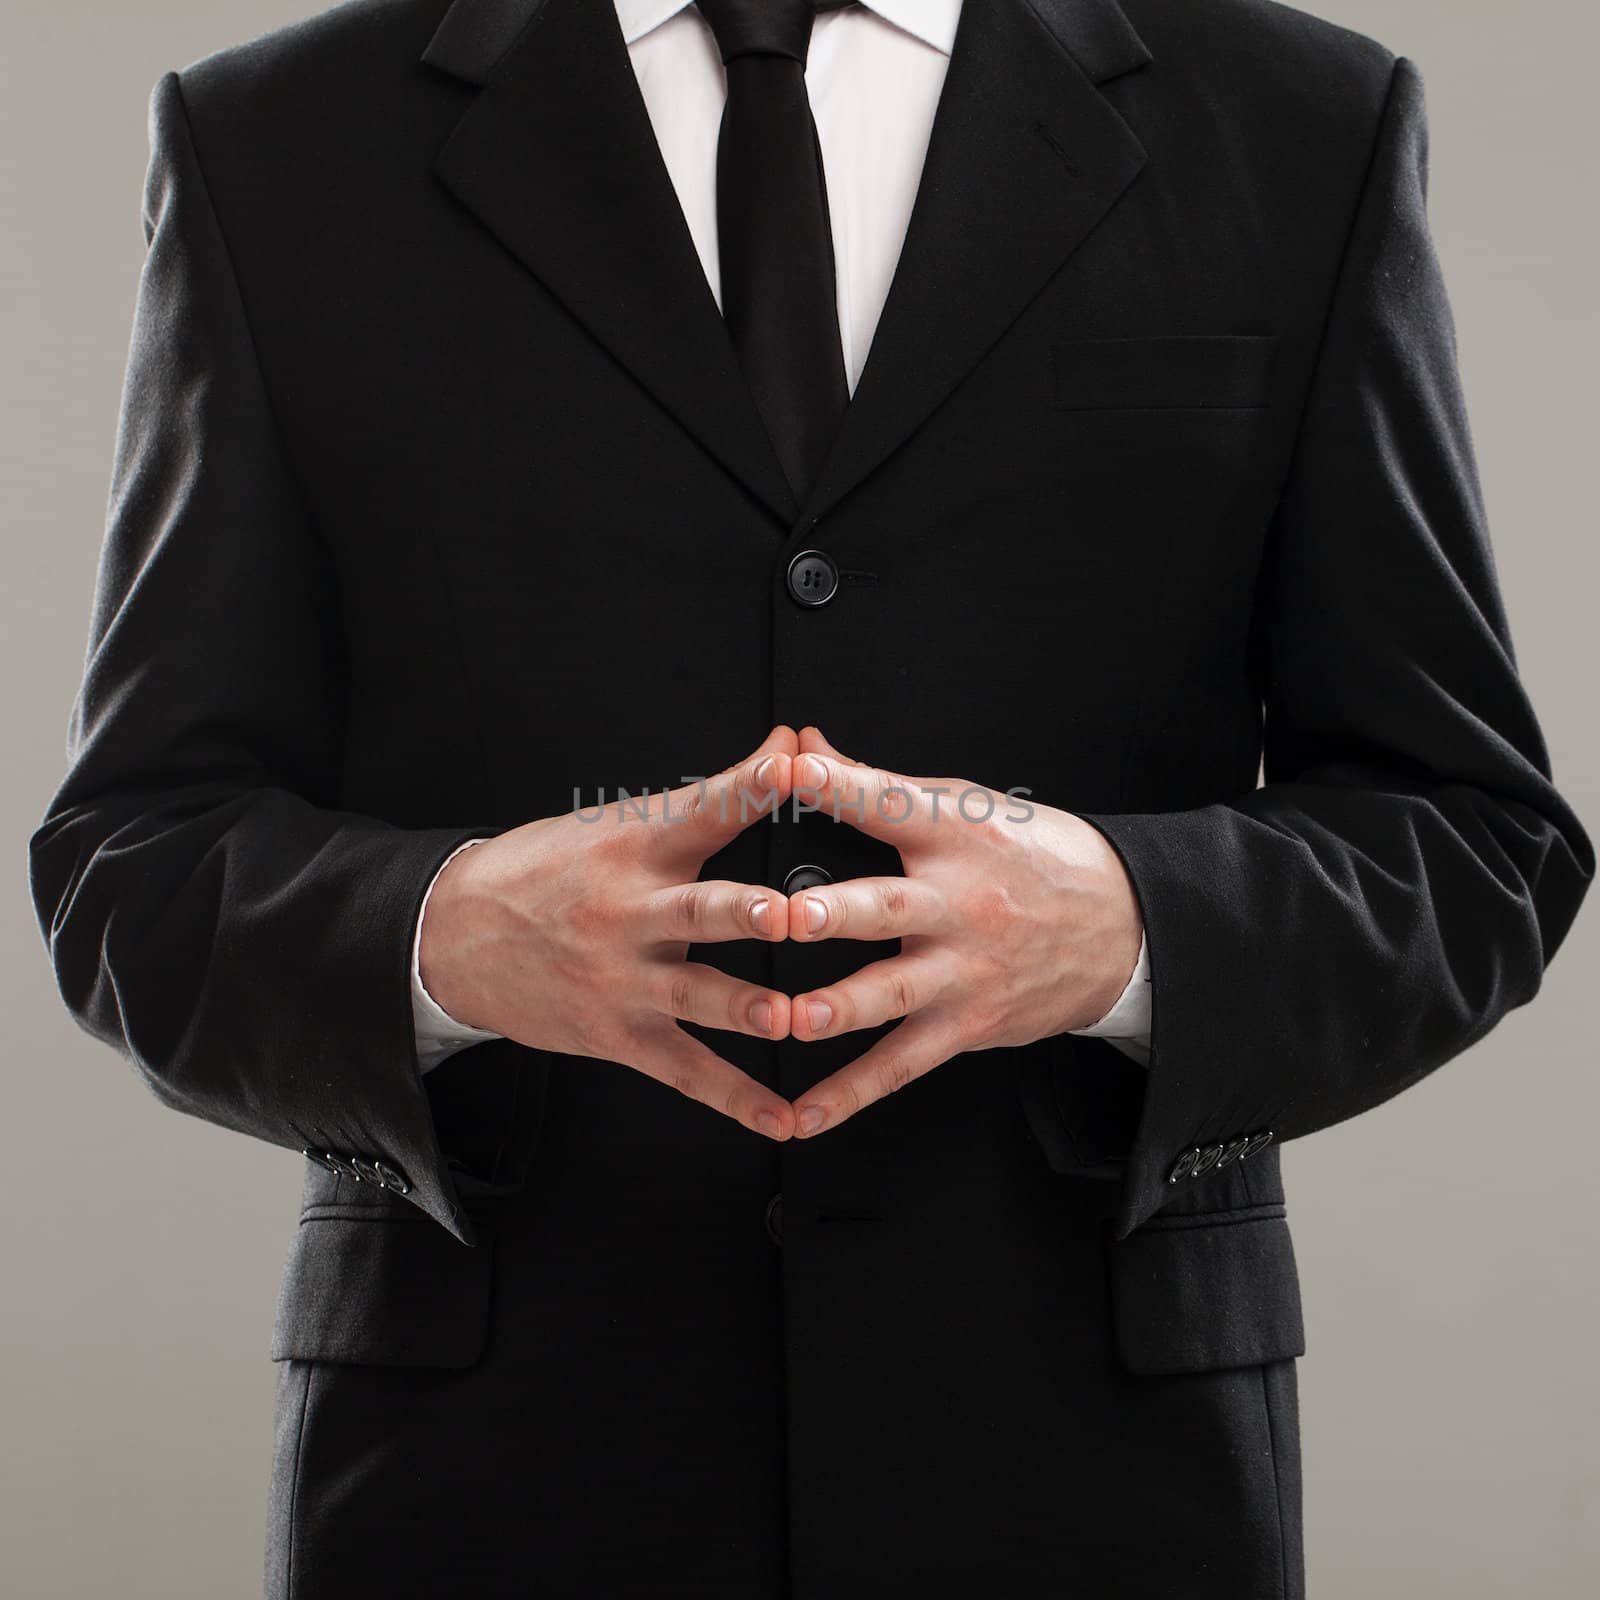 Businessman's torso in suit over grey background